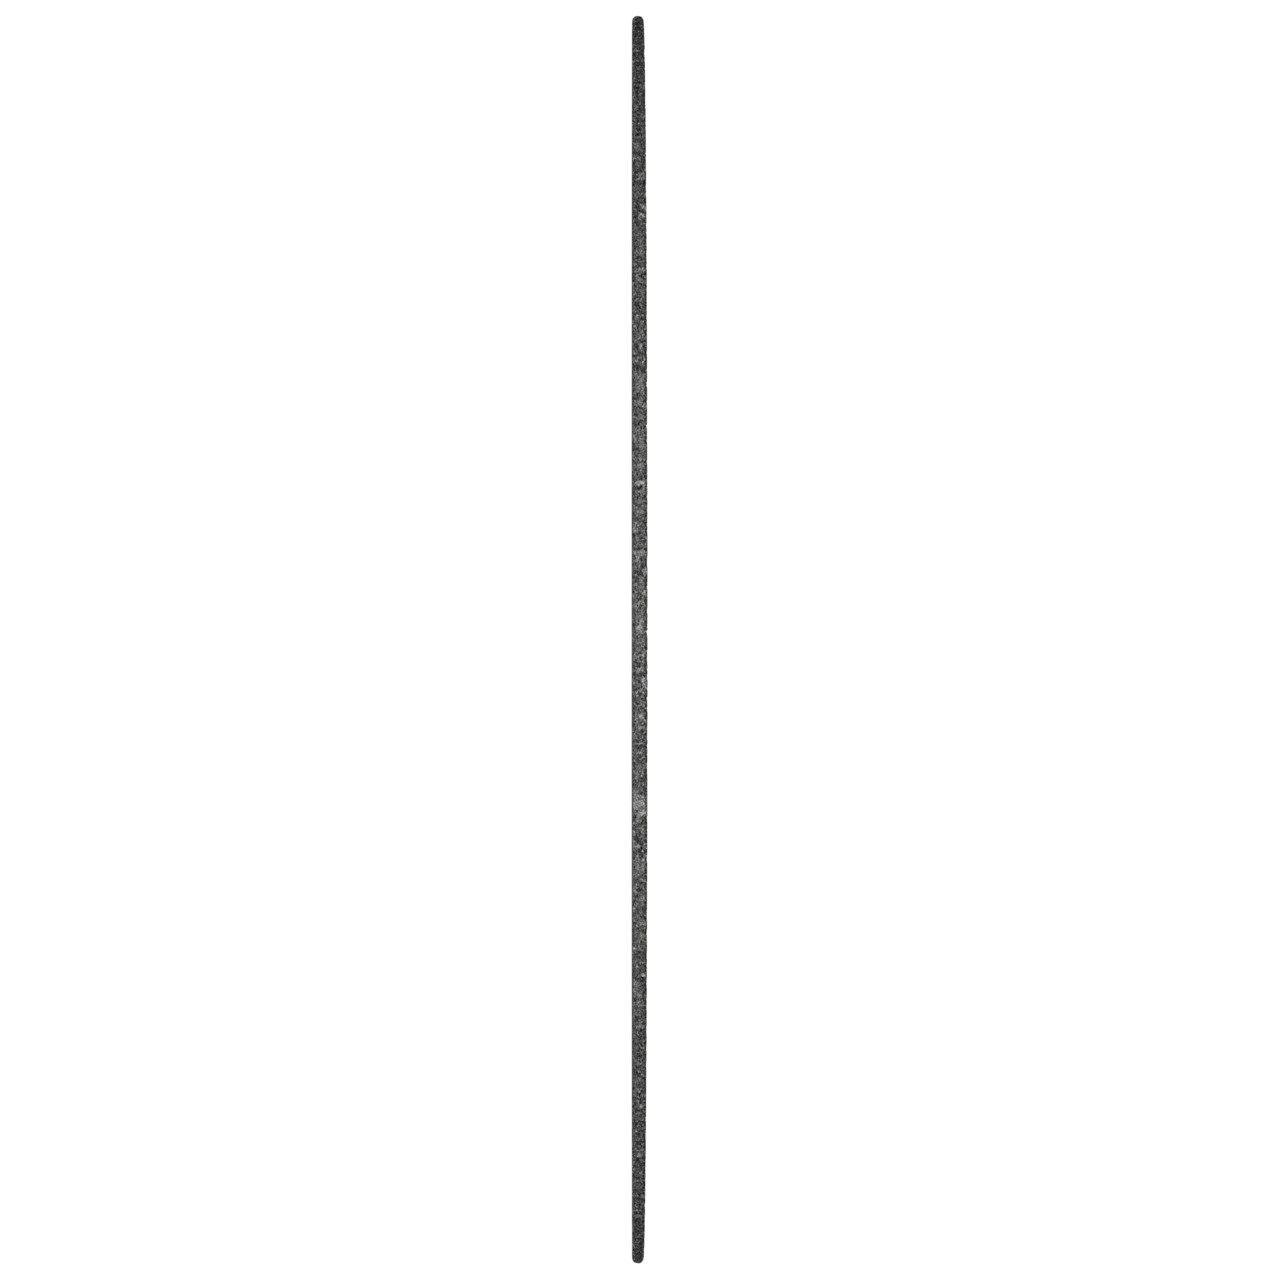 Dischi da taglio Tyrolit DxDxH 63x2x10 Per acciaio, forma: 41 - versione diritta, Art. 704198